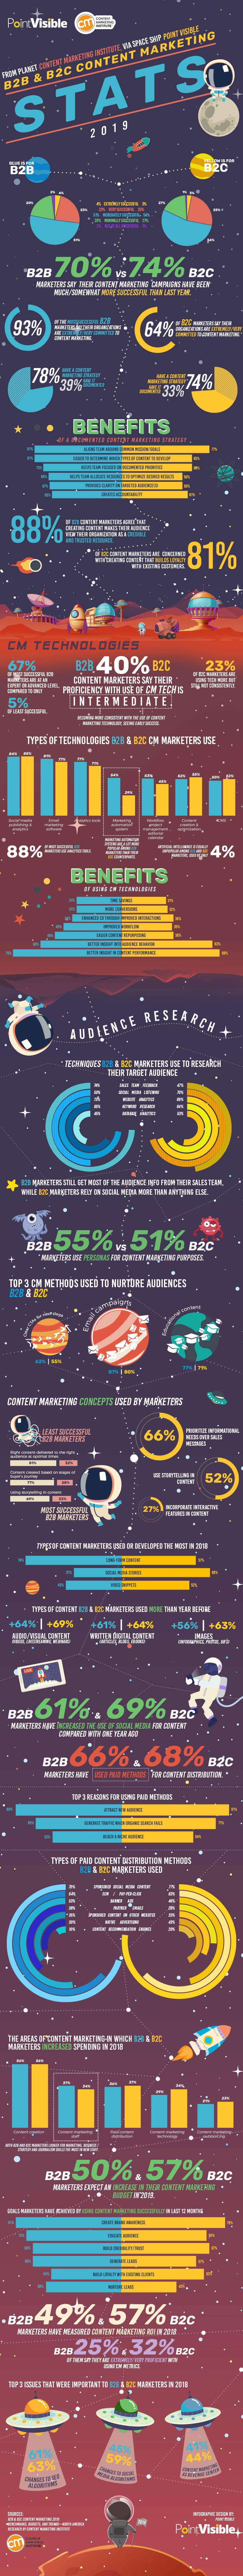 2019 B2B and B2C Content Marketing Statistics